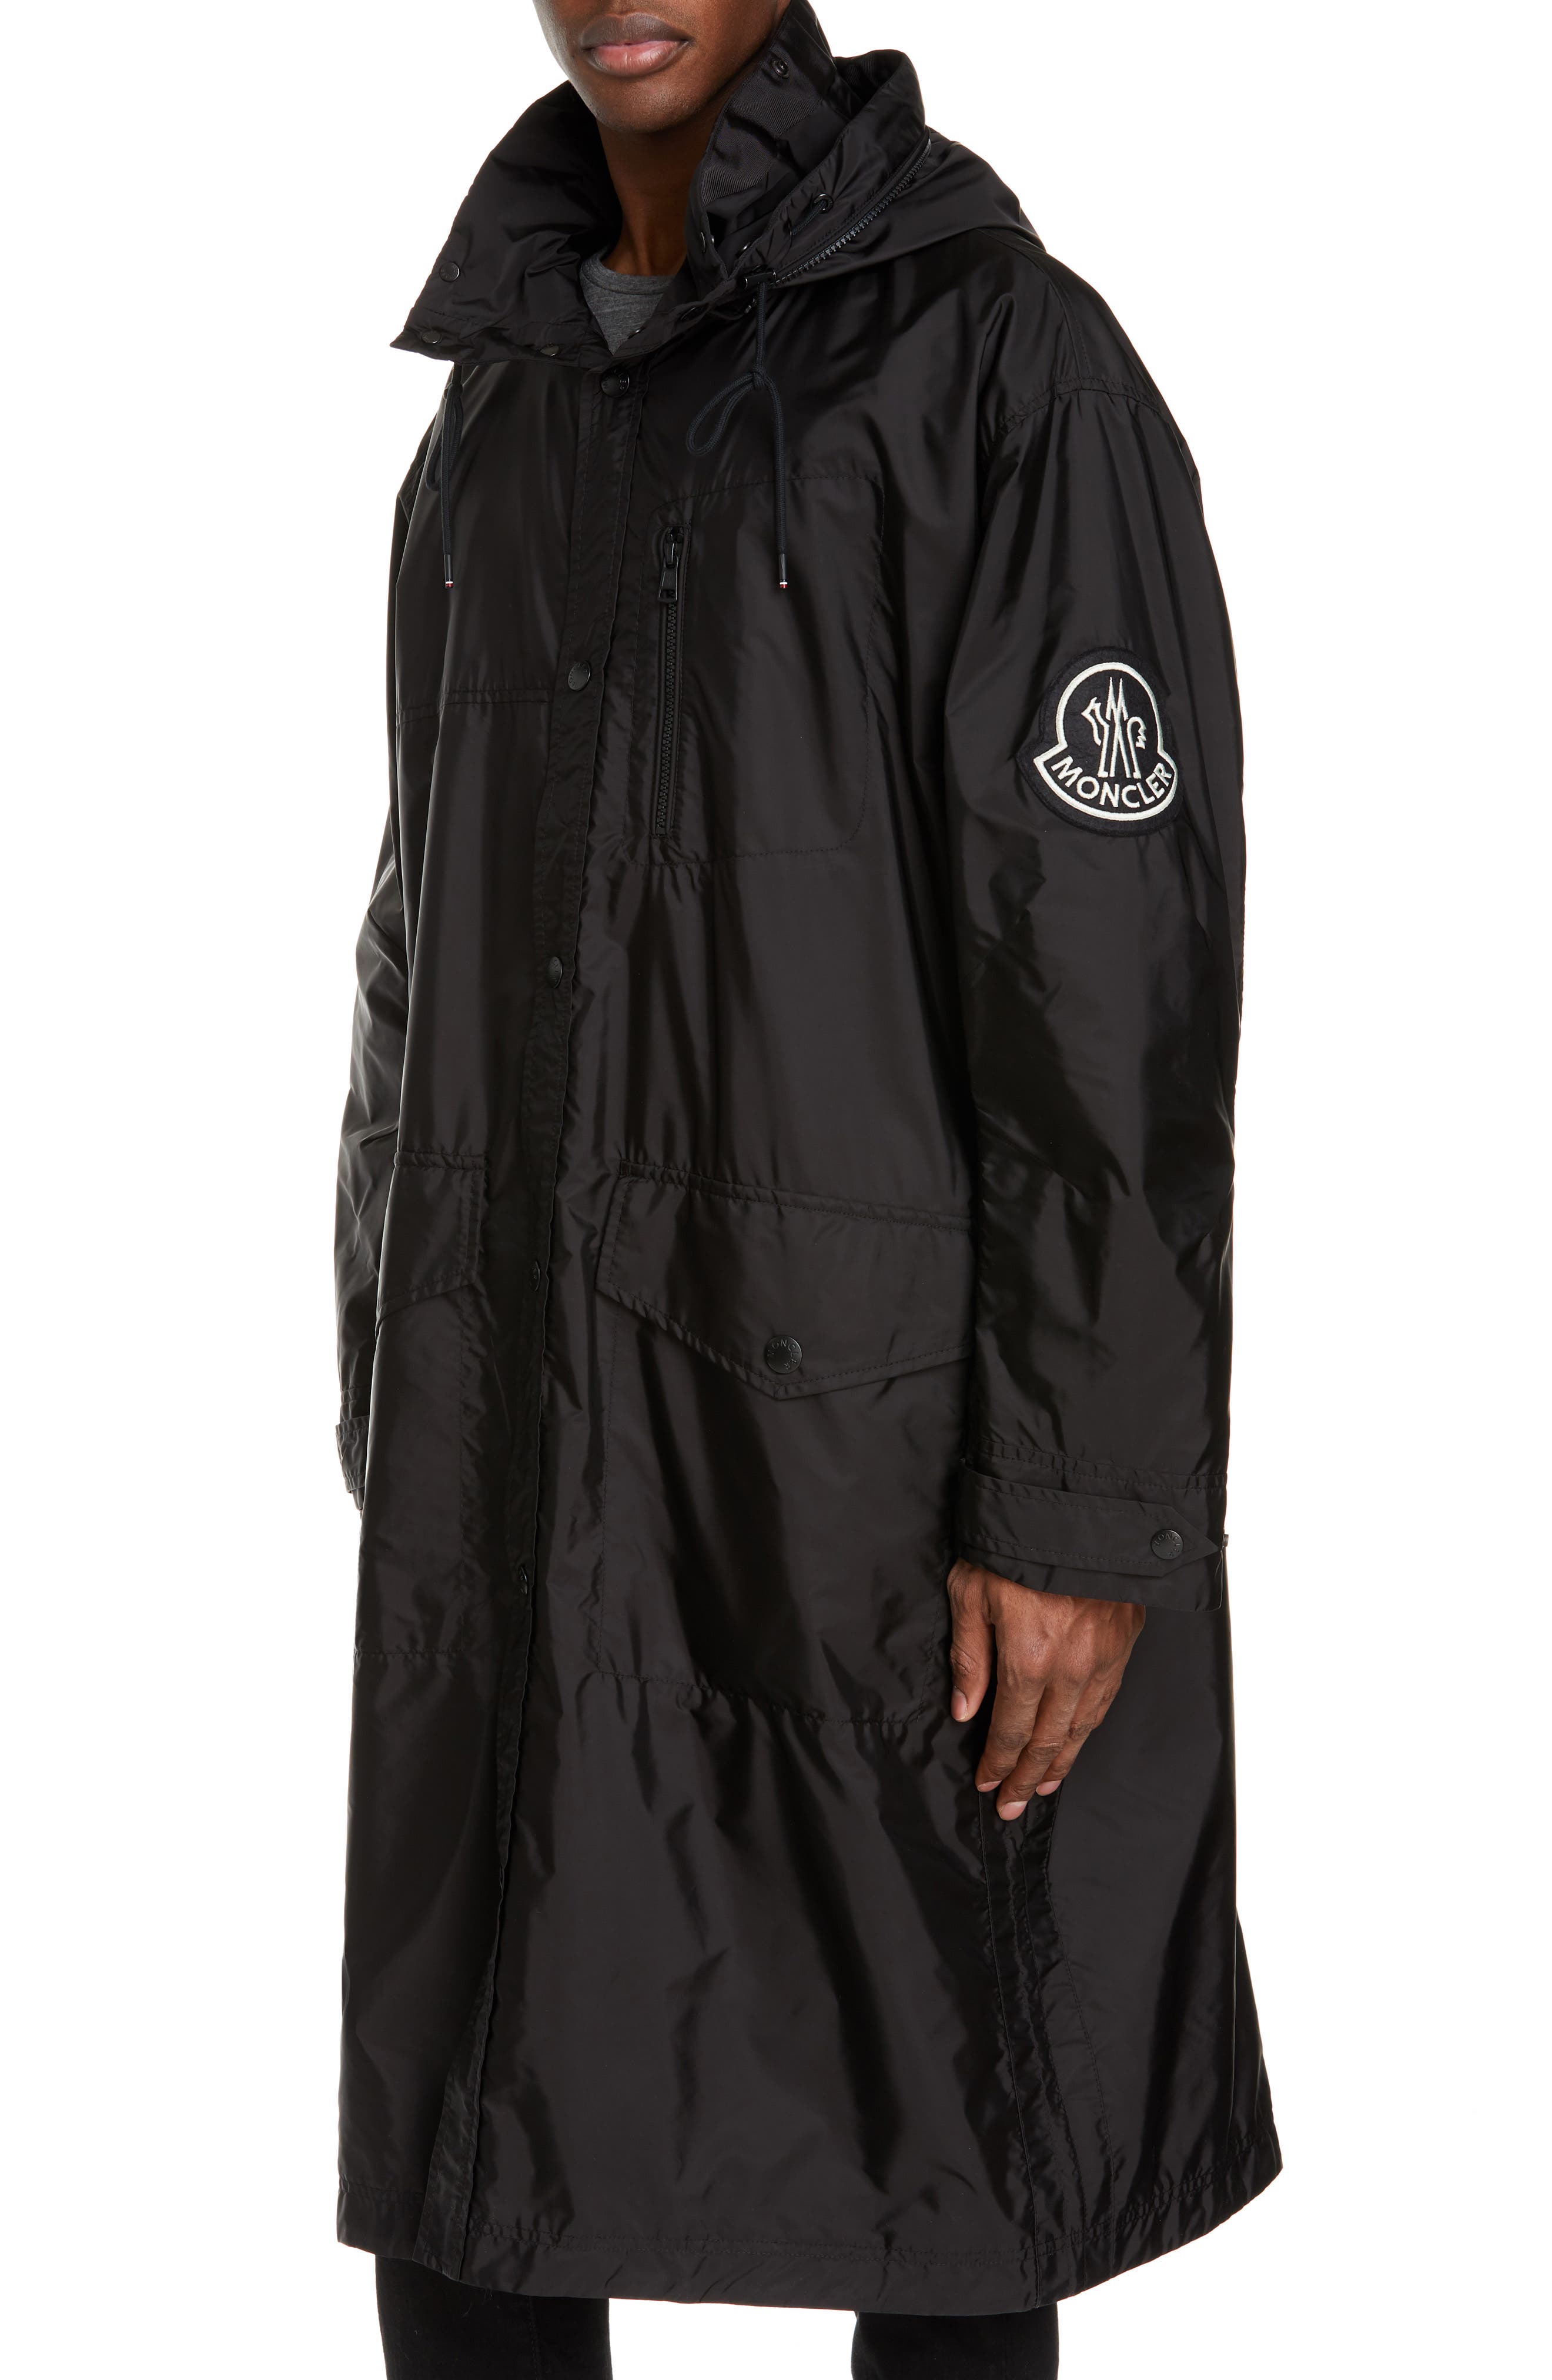 moncler waterproof jacket